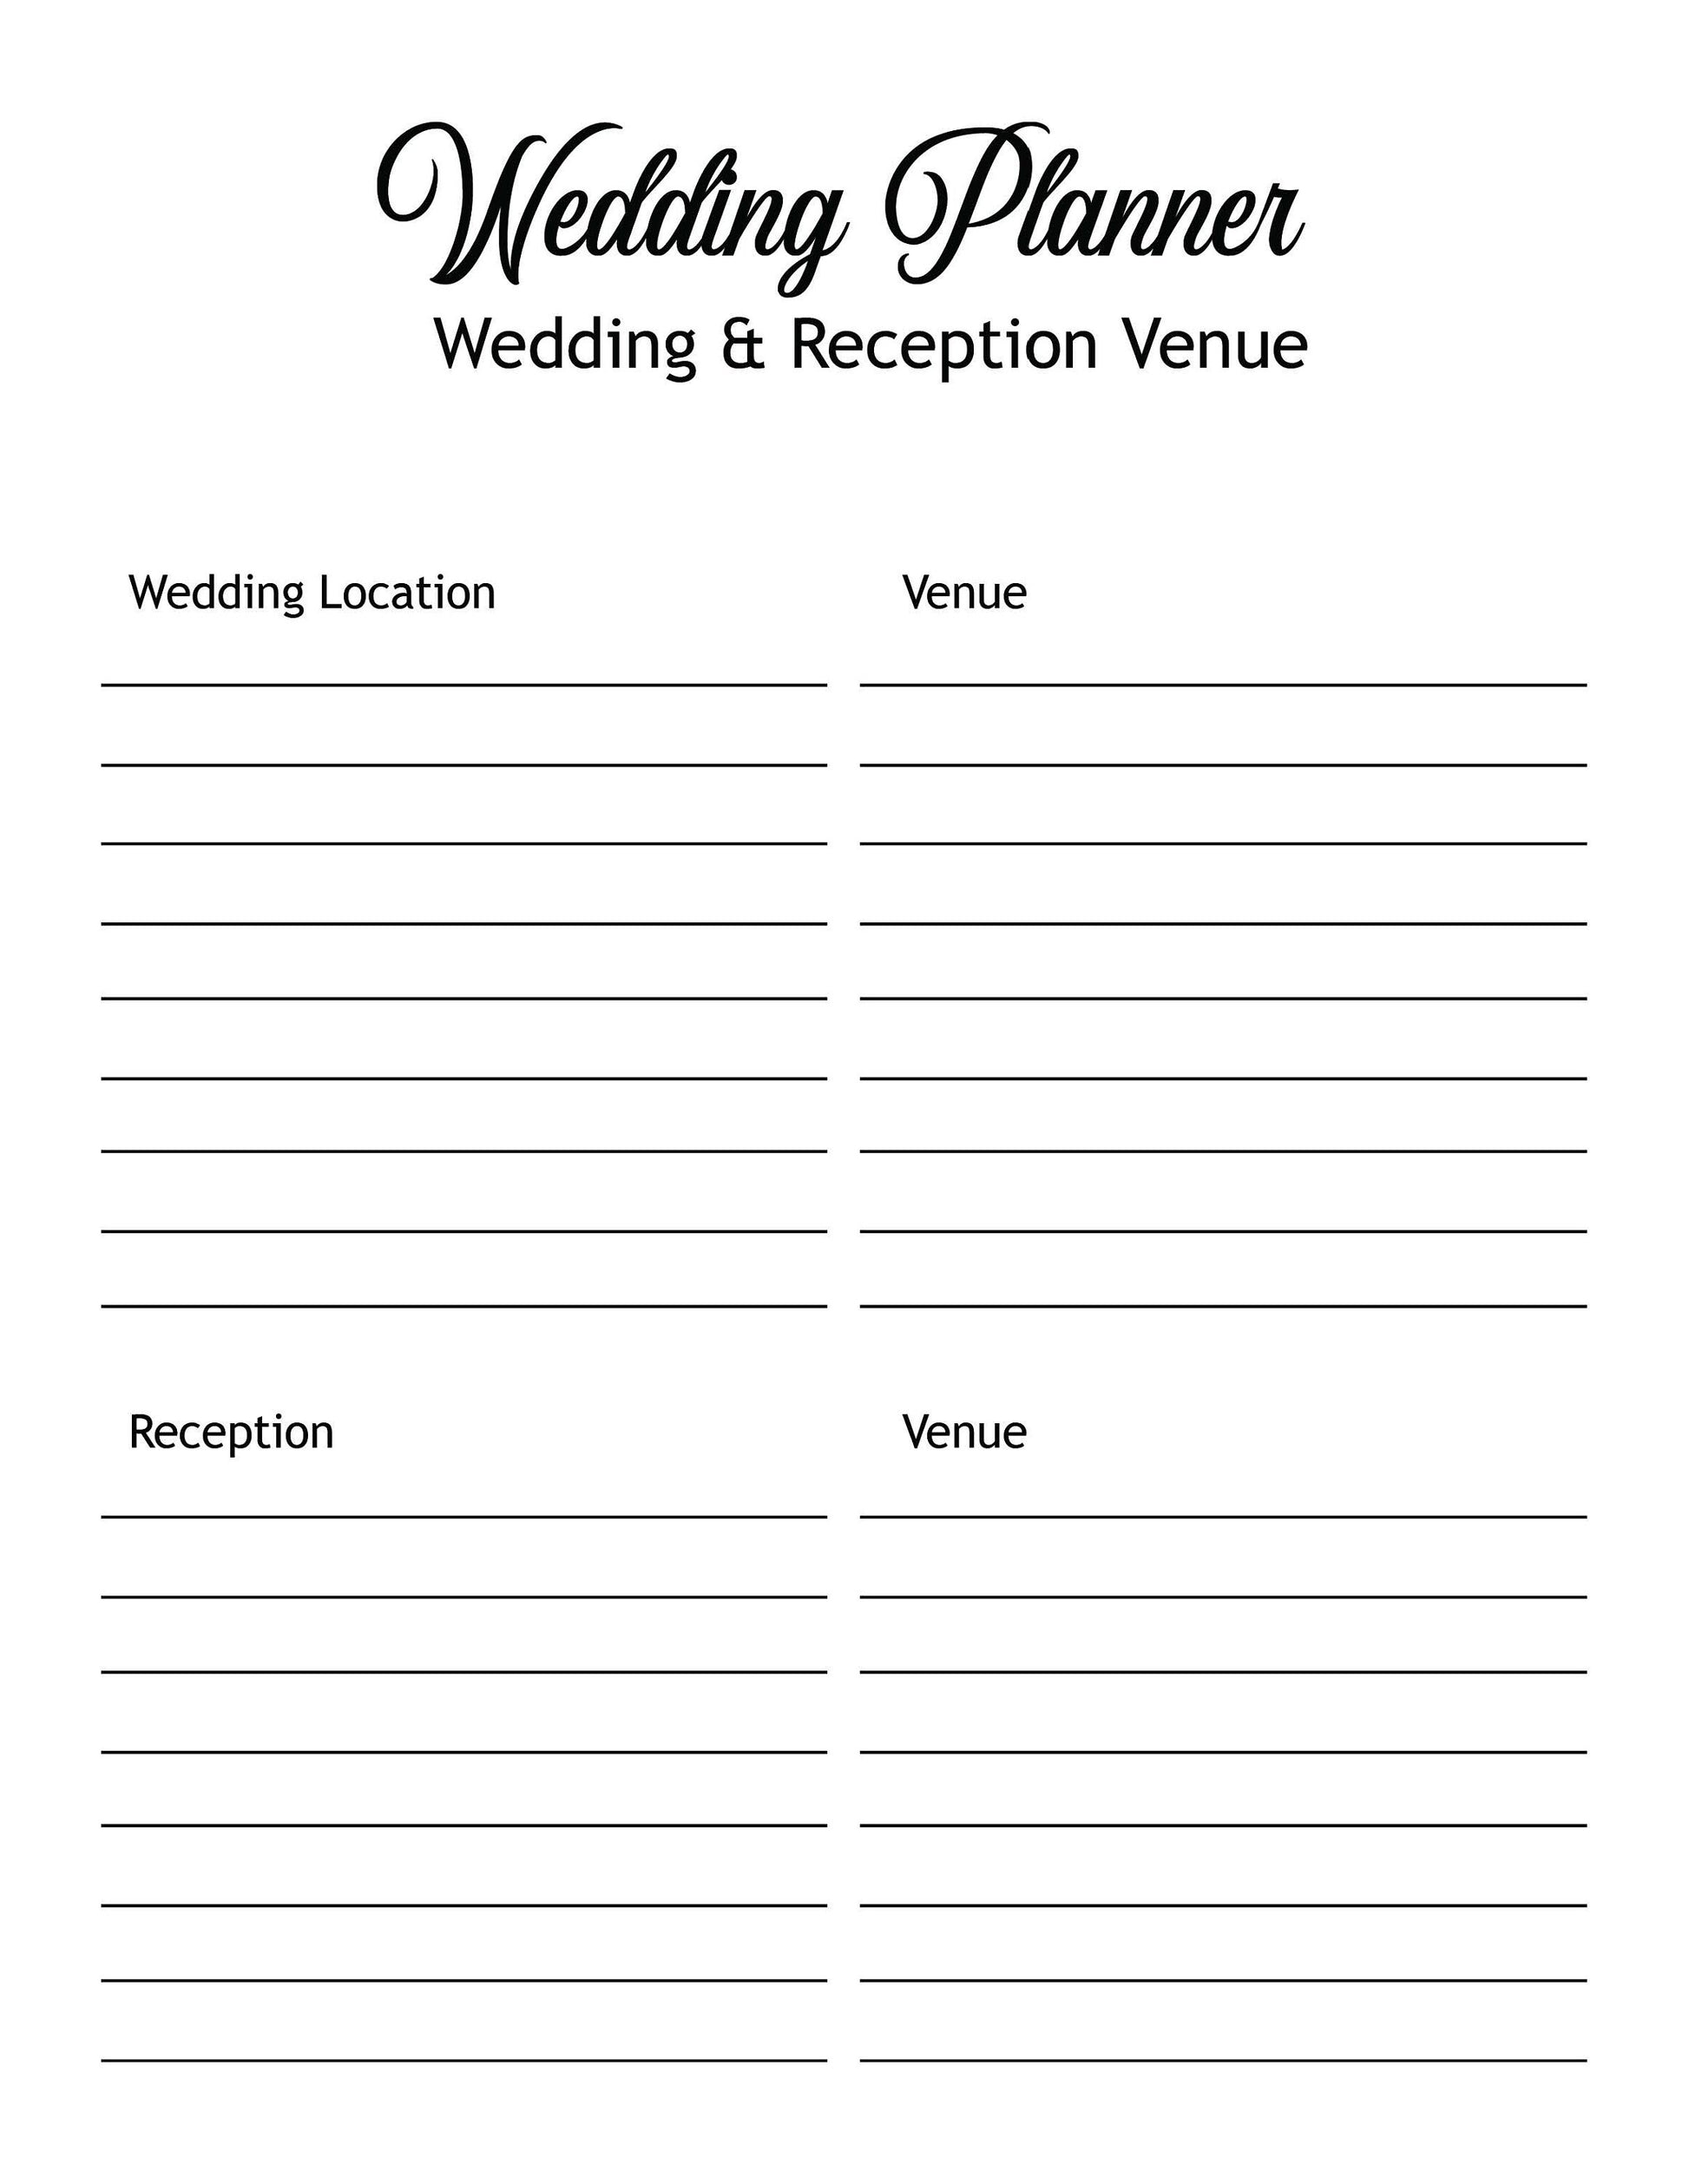 printable wedding checklist to do